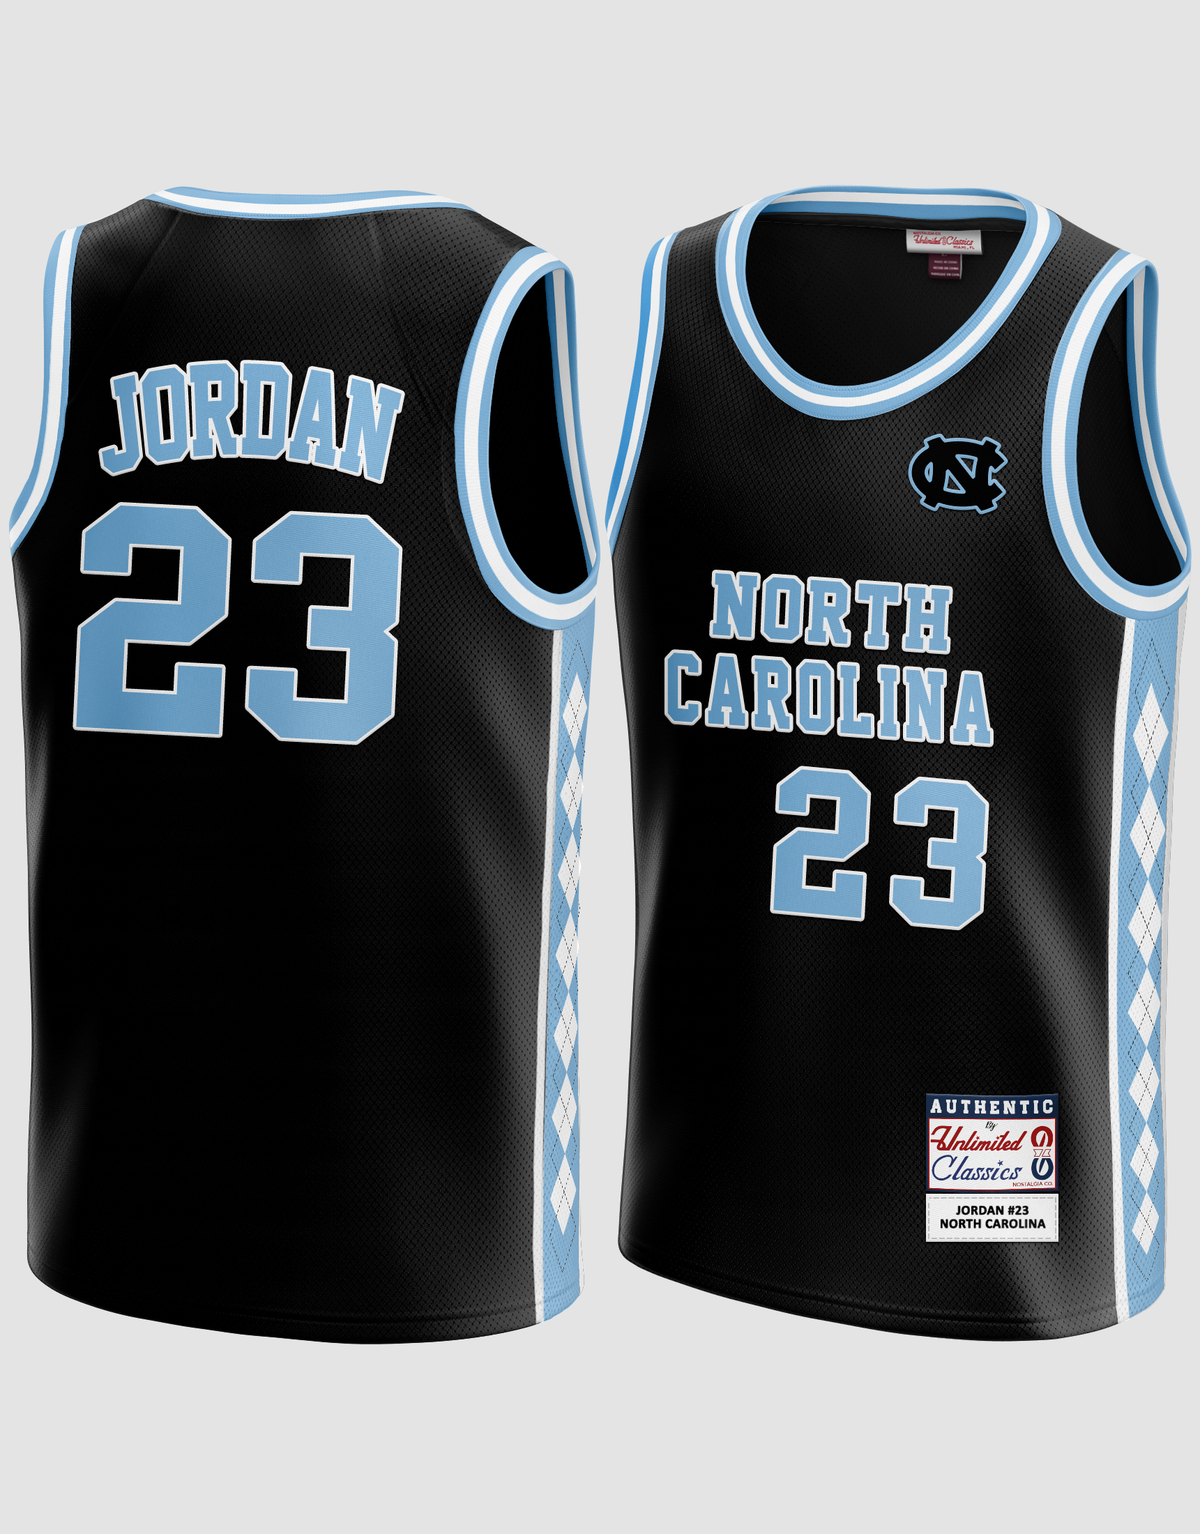 North Carolina Michael Jordan #23 Black Jersey